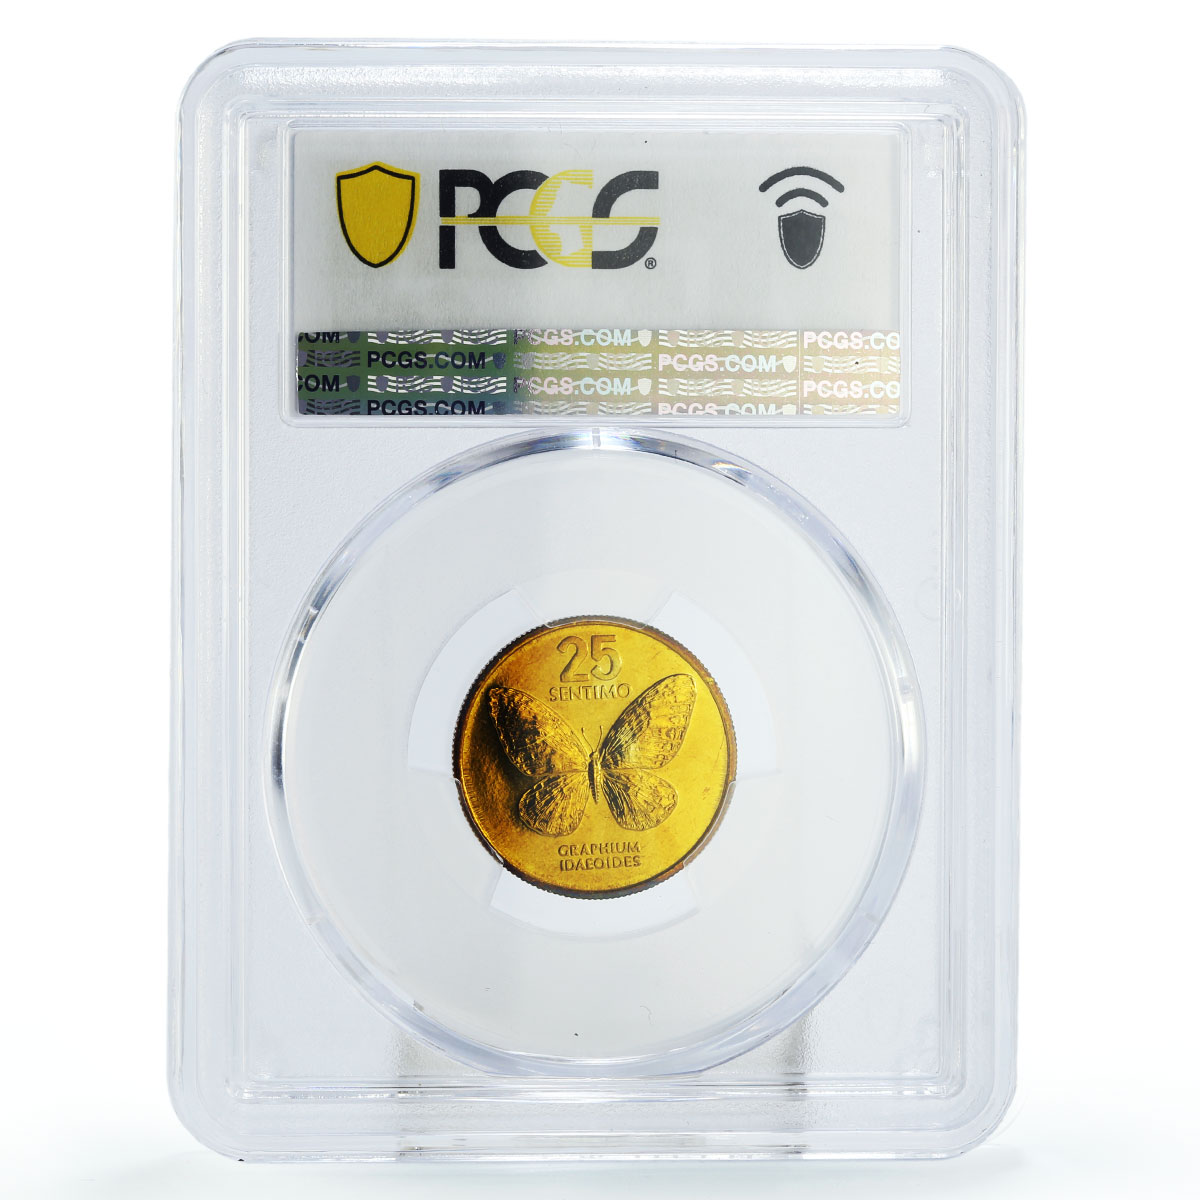 Philippines 25 sen Regular Coinage Juan Luna KM-241.1 MS68 PCGS brass coin 1983